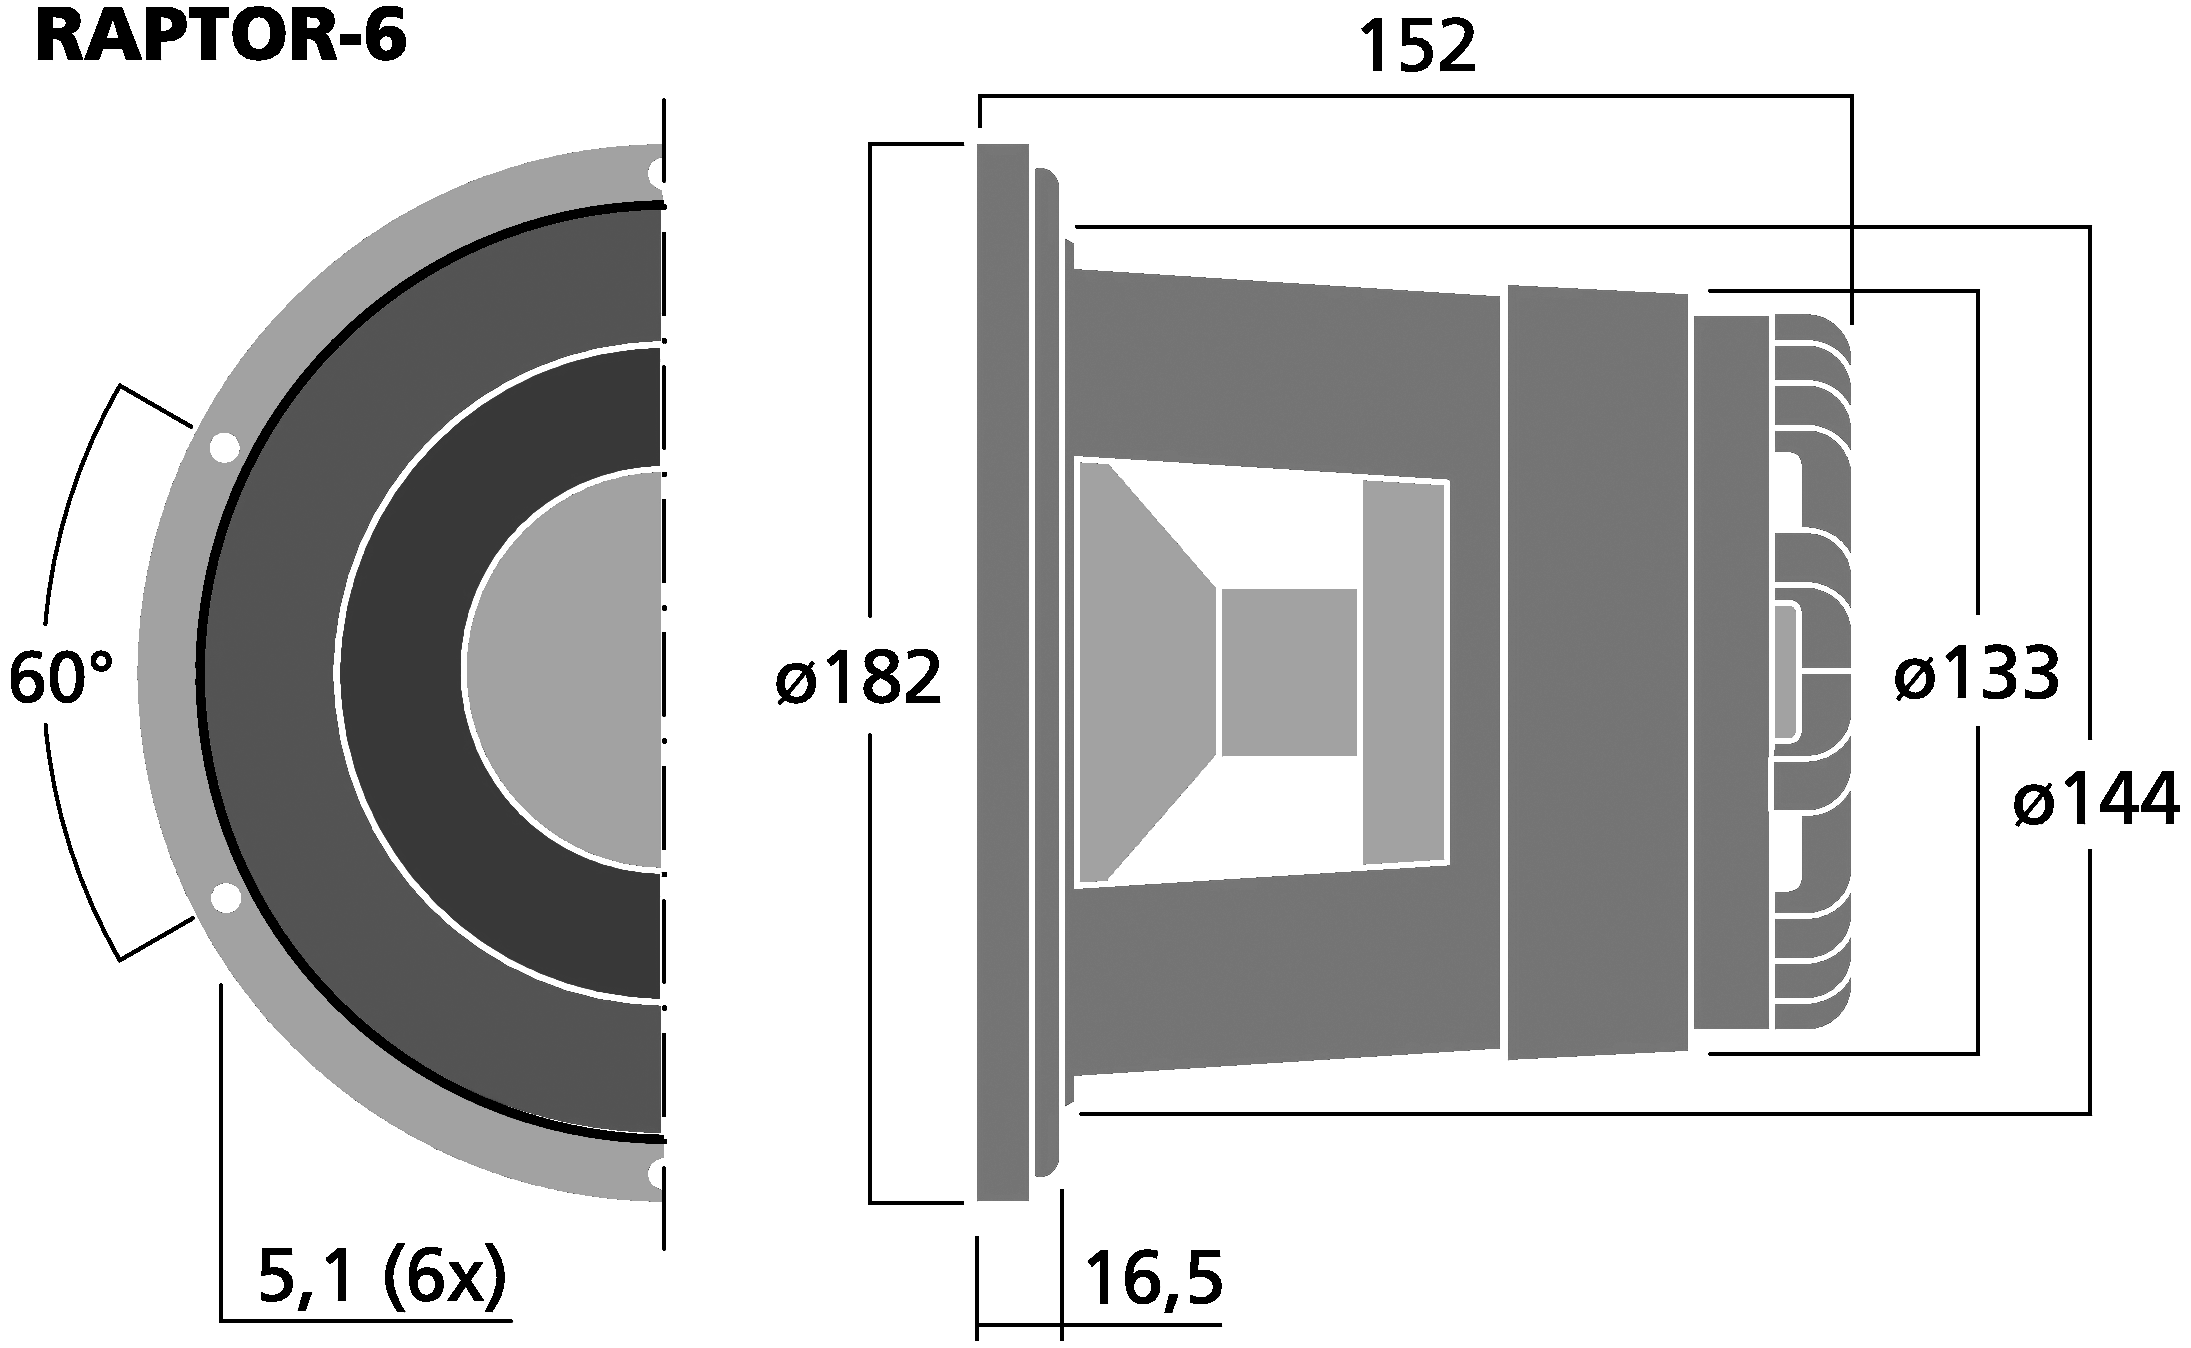 MONACOR RAPTOR-6 Dimensions